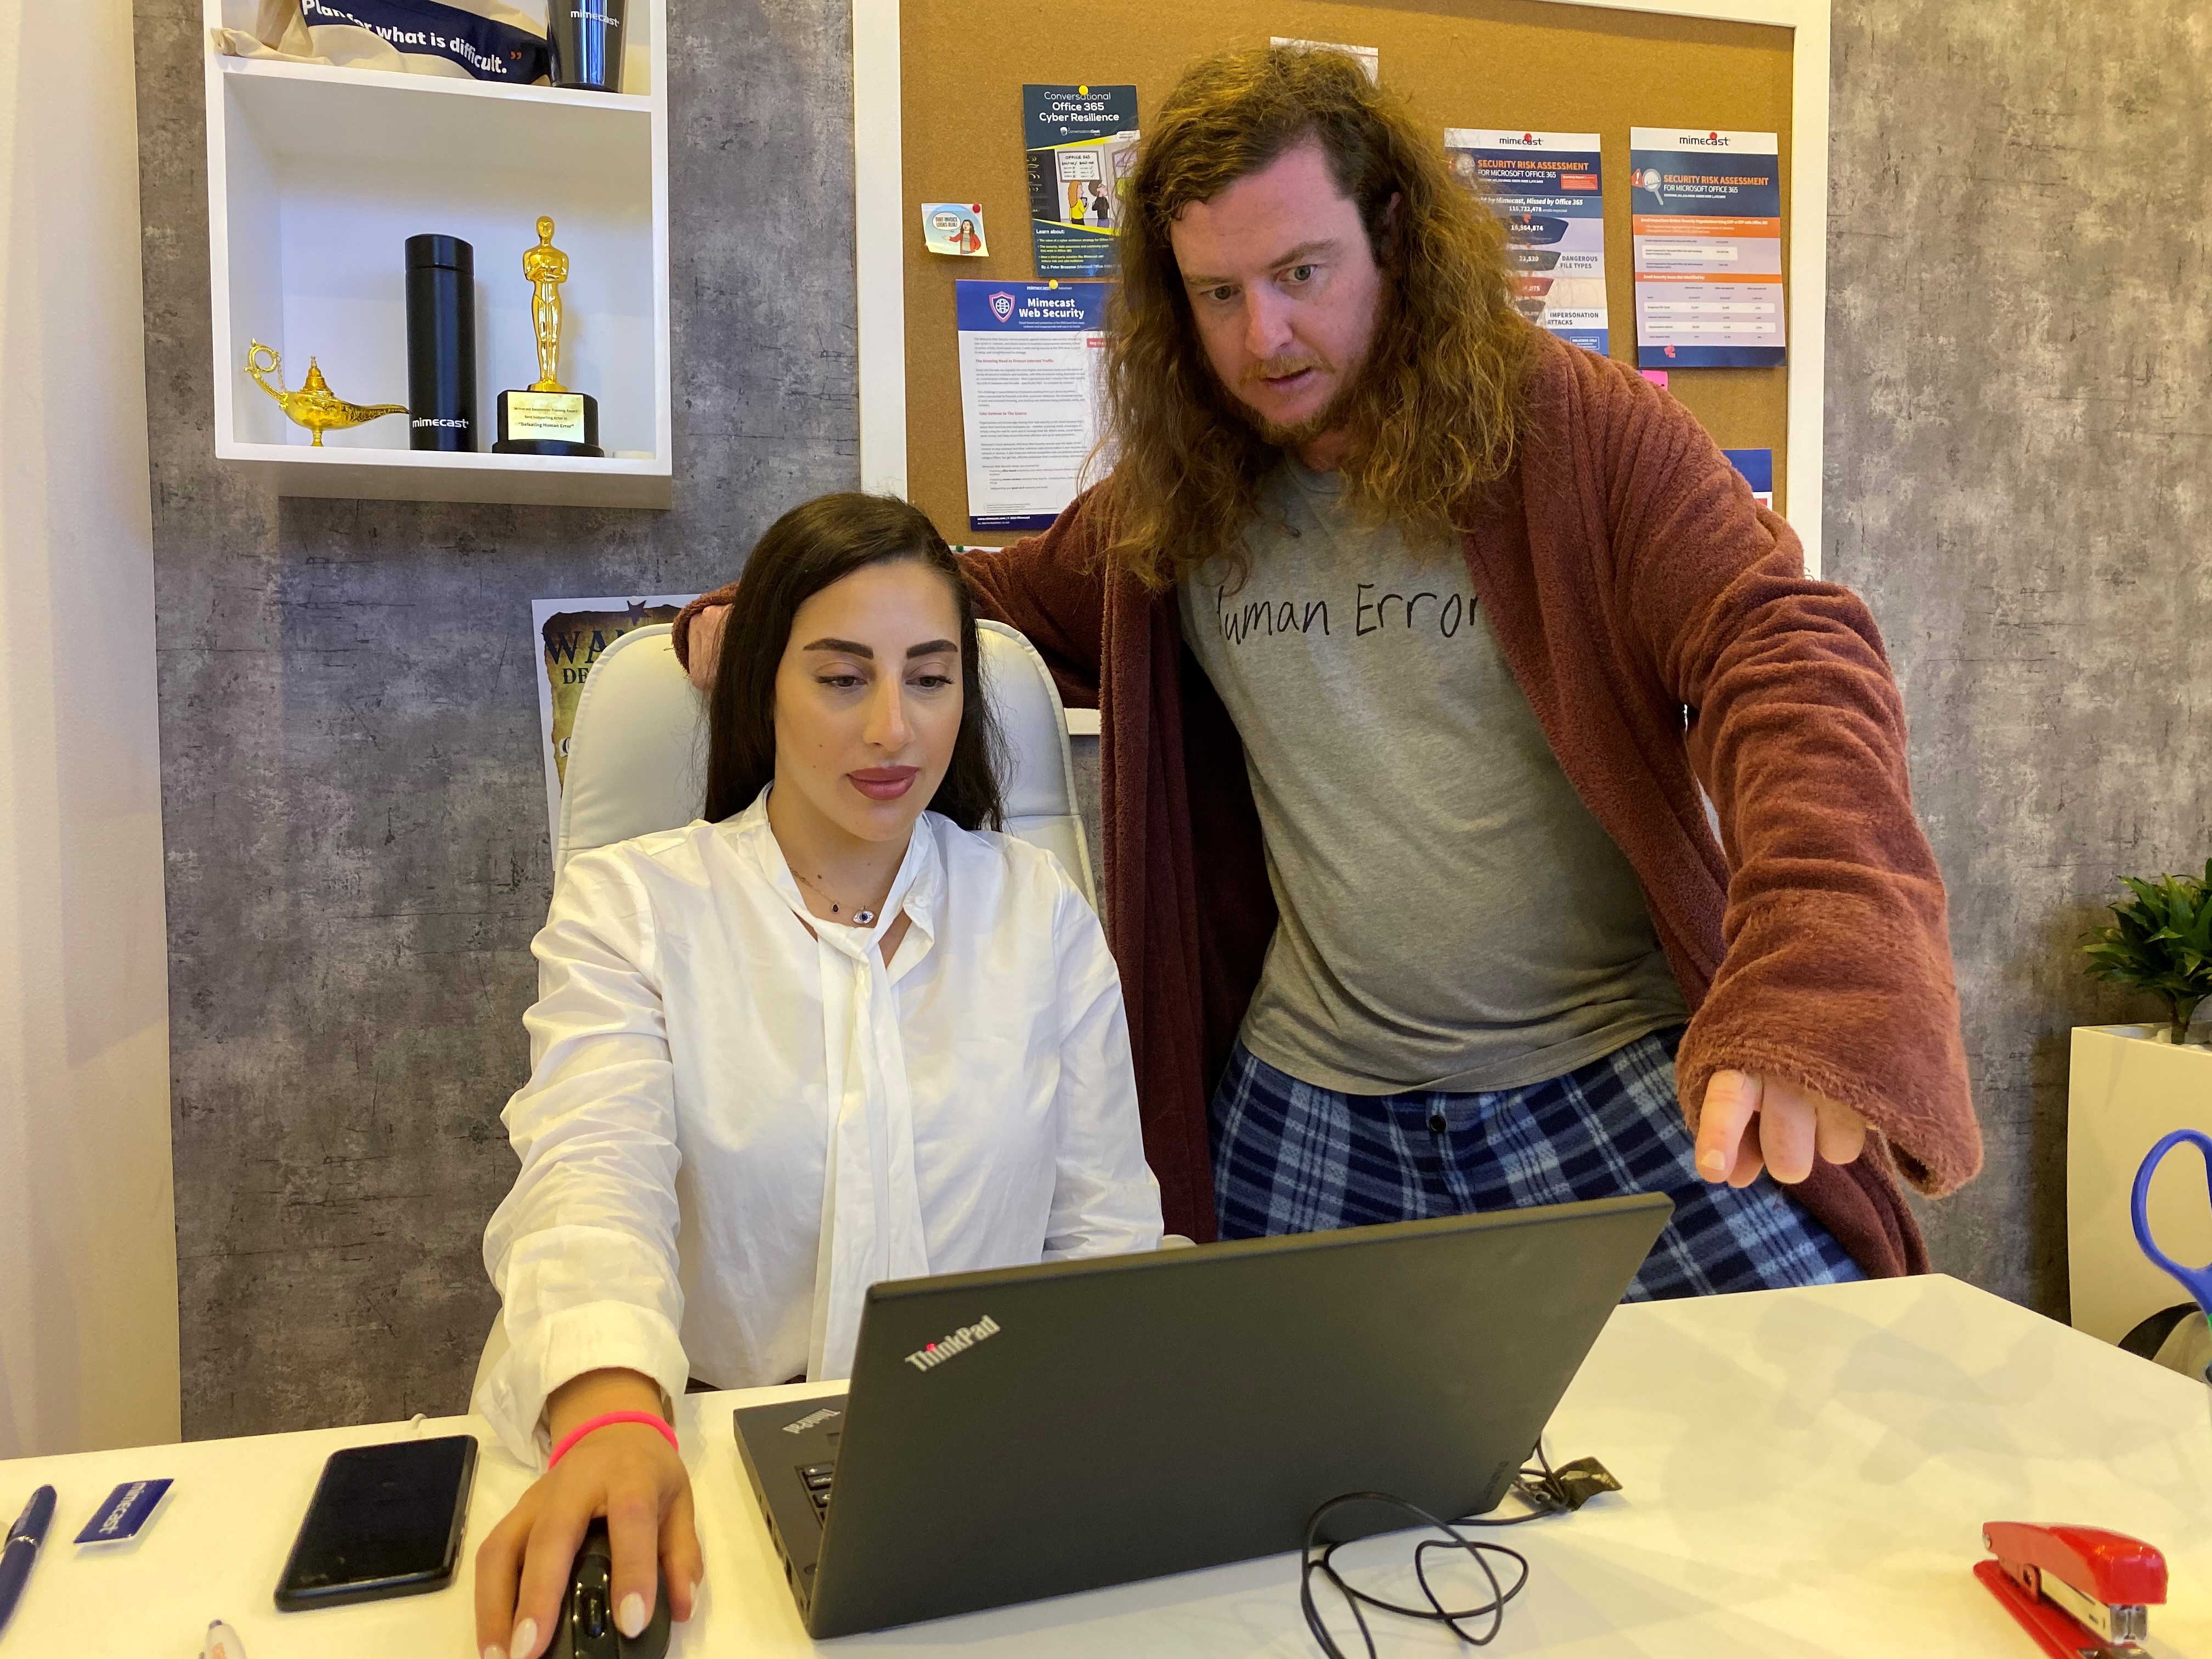 Dubai resident Perla Assaf challenges Mimecast’s Human Error as part of a cybersecurity awareness campaign